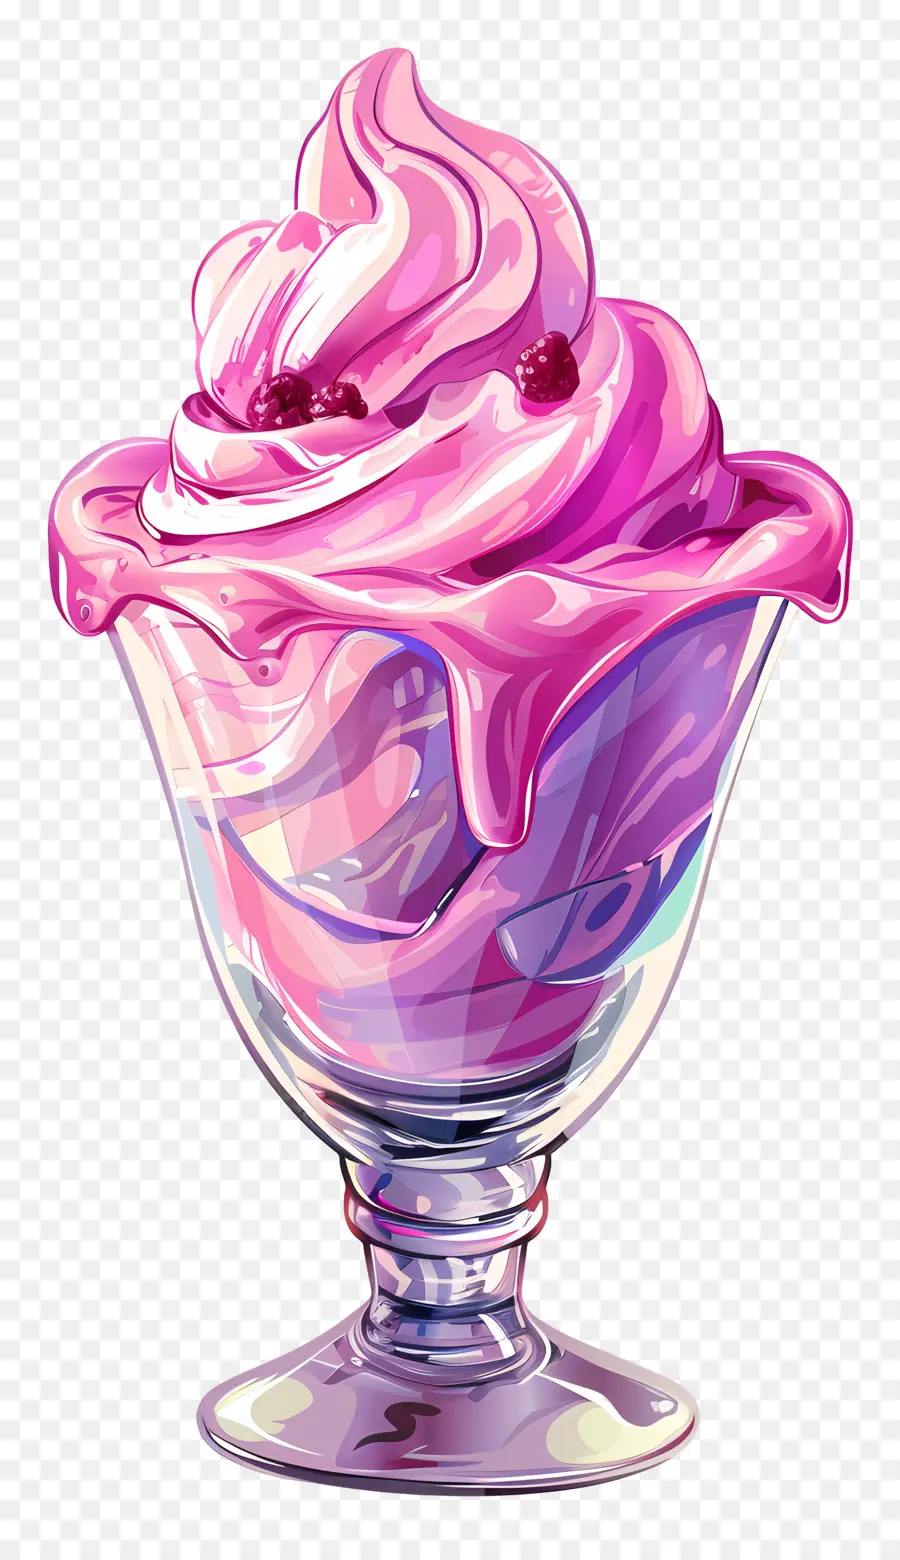 cup ice cream pink ice cream glass bowl red cherry vibrant